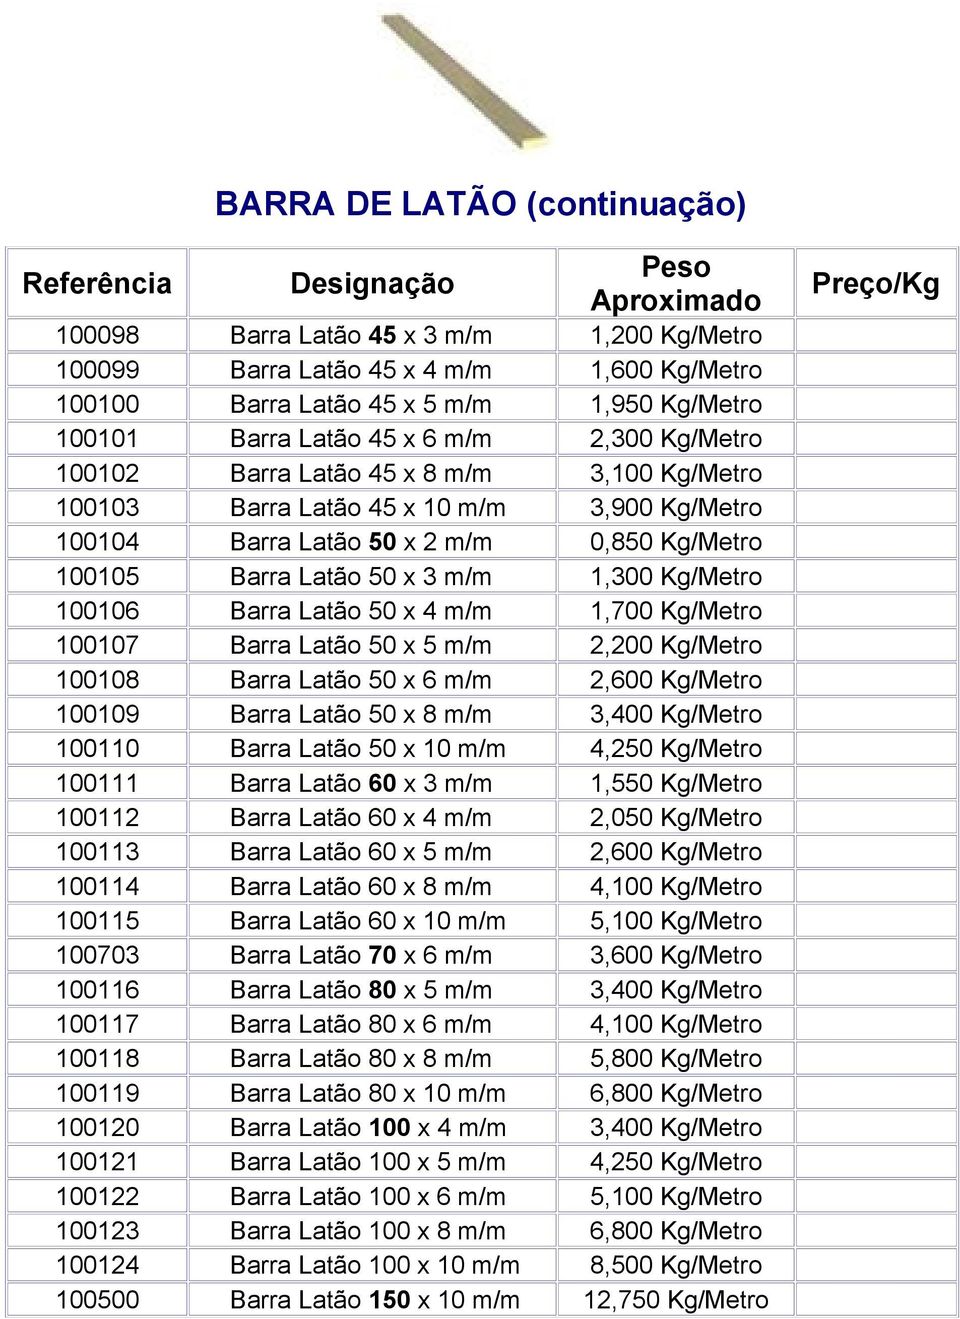 Barra Latão 50 x 4 m/m 1,700 Kg/Metro 100107 Barra Latão 50 x 5 m/m 2,200 Kg/Metro 100108 Barra Latão 50 x 6 m/m 2,600 Kg/Metro 100109 Barra Latão 50 x 8 m/m 3,400 Kg/Metro 100110 Barra Latão 50 x 10